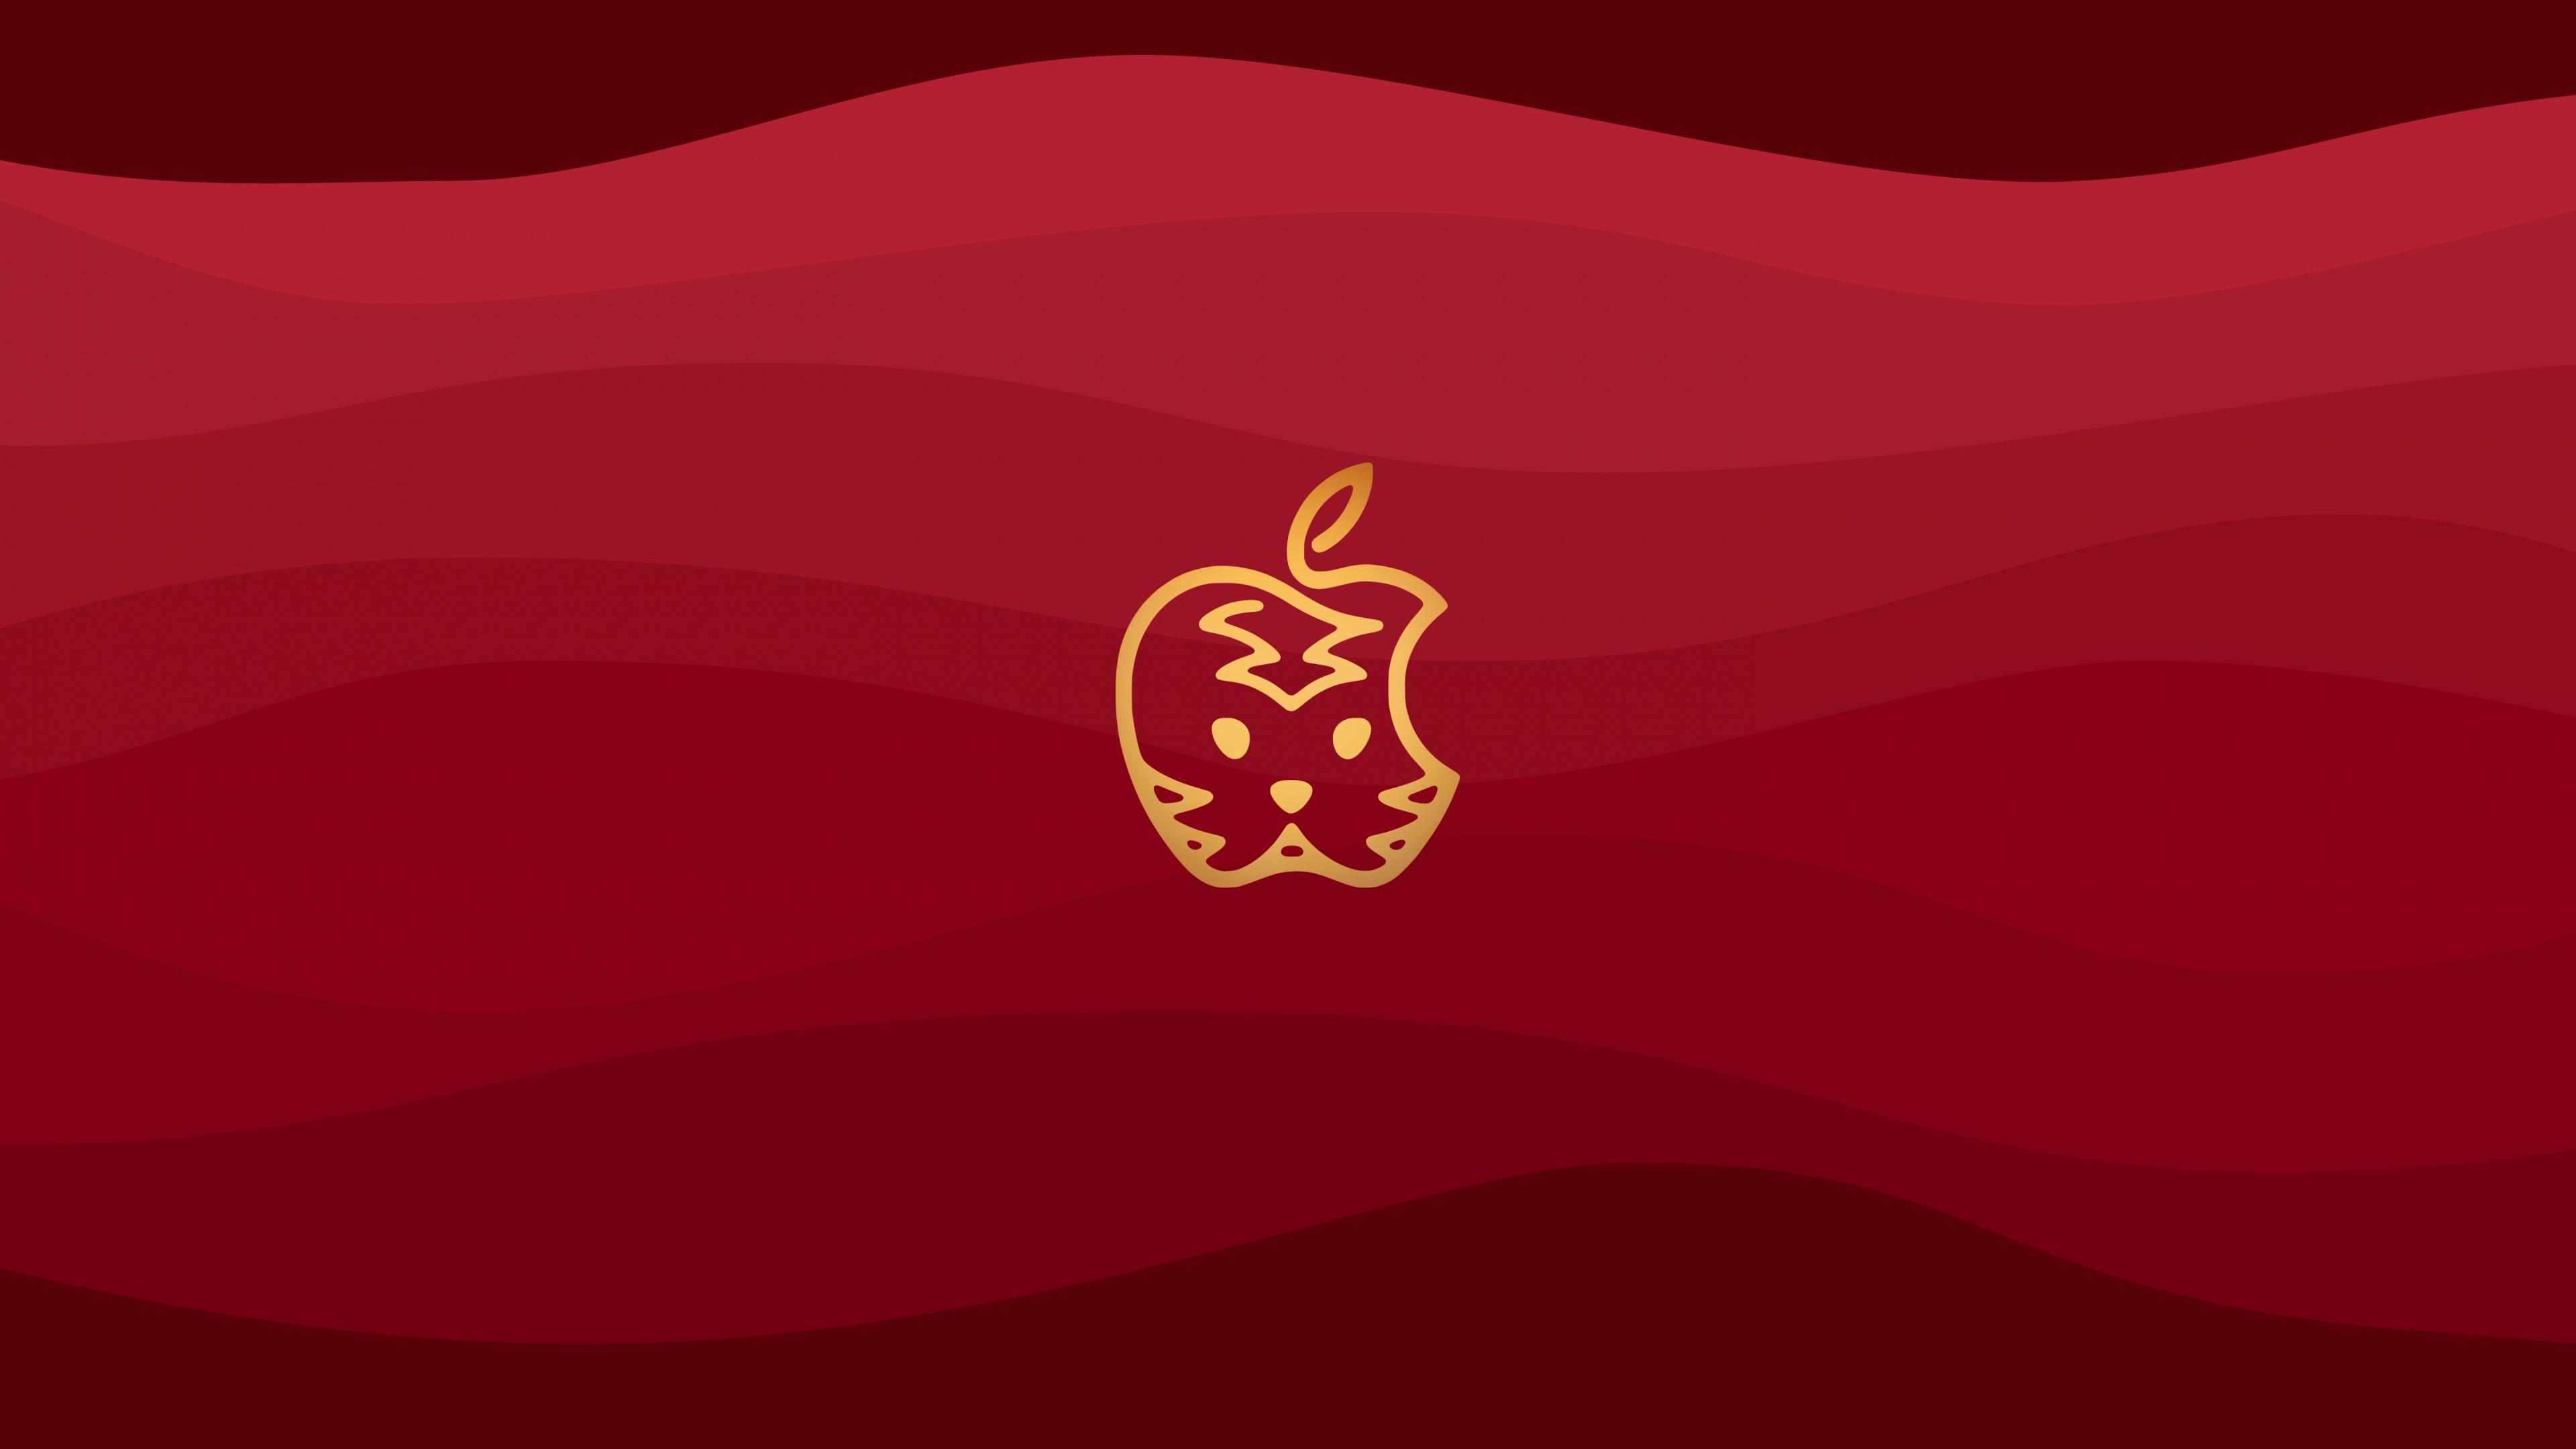 Red Apple Wallpaper Images  Free Download on Freepik